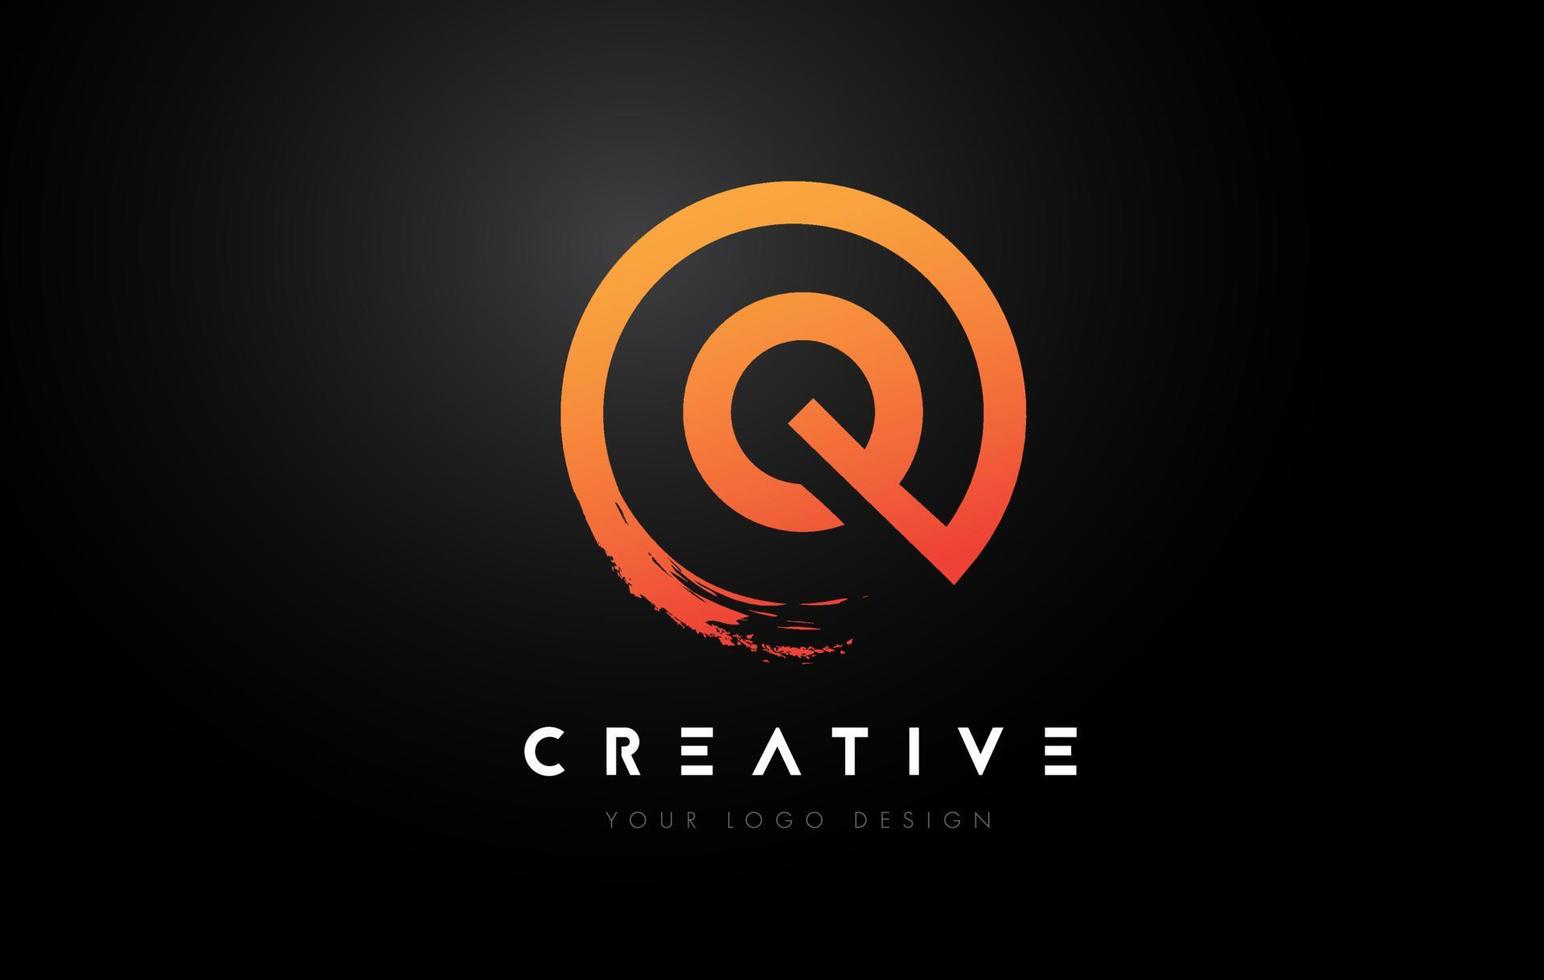 Orange Q Circular Letter Logo with Circle Brush Design and Black Background. vector